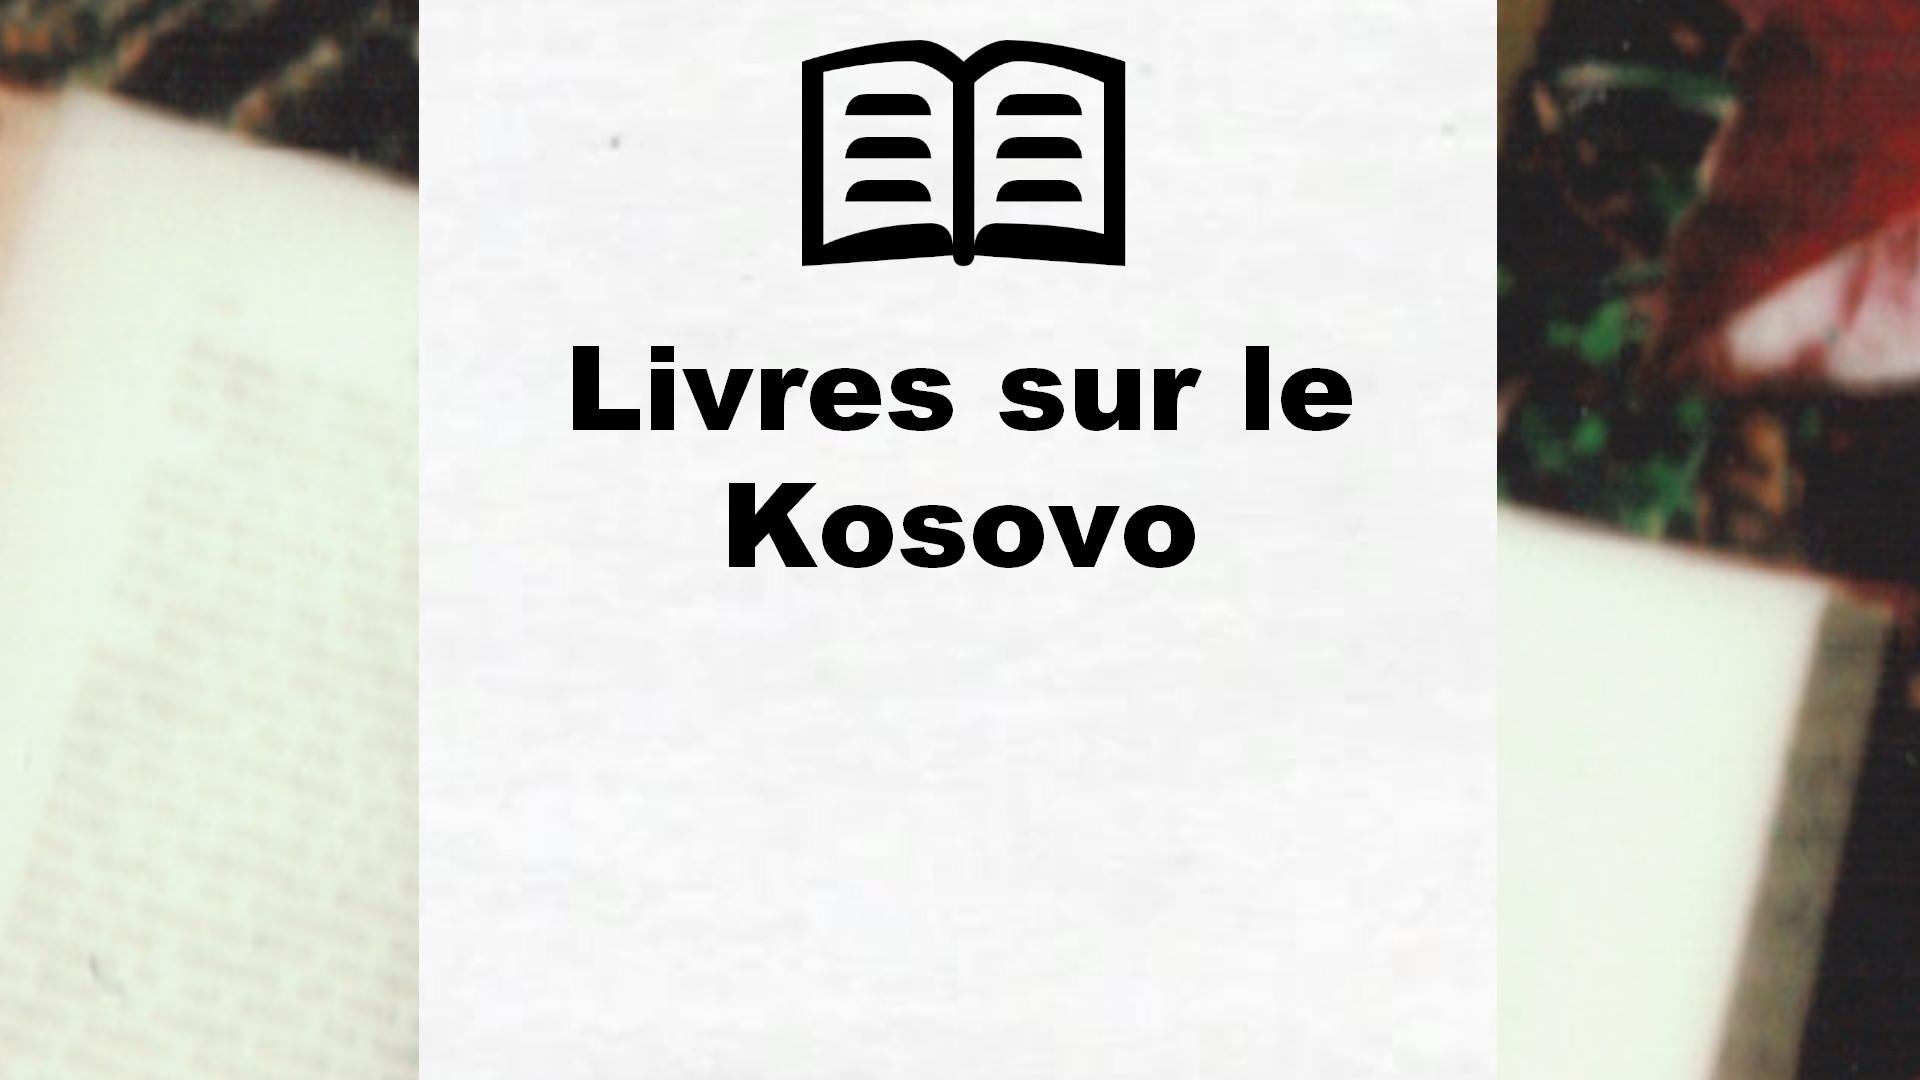 Livres sur le Kosovo